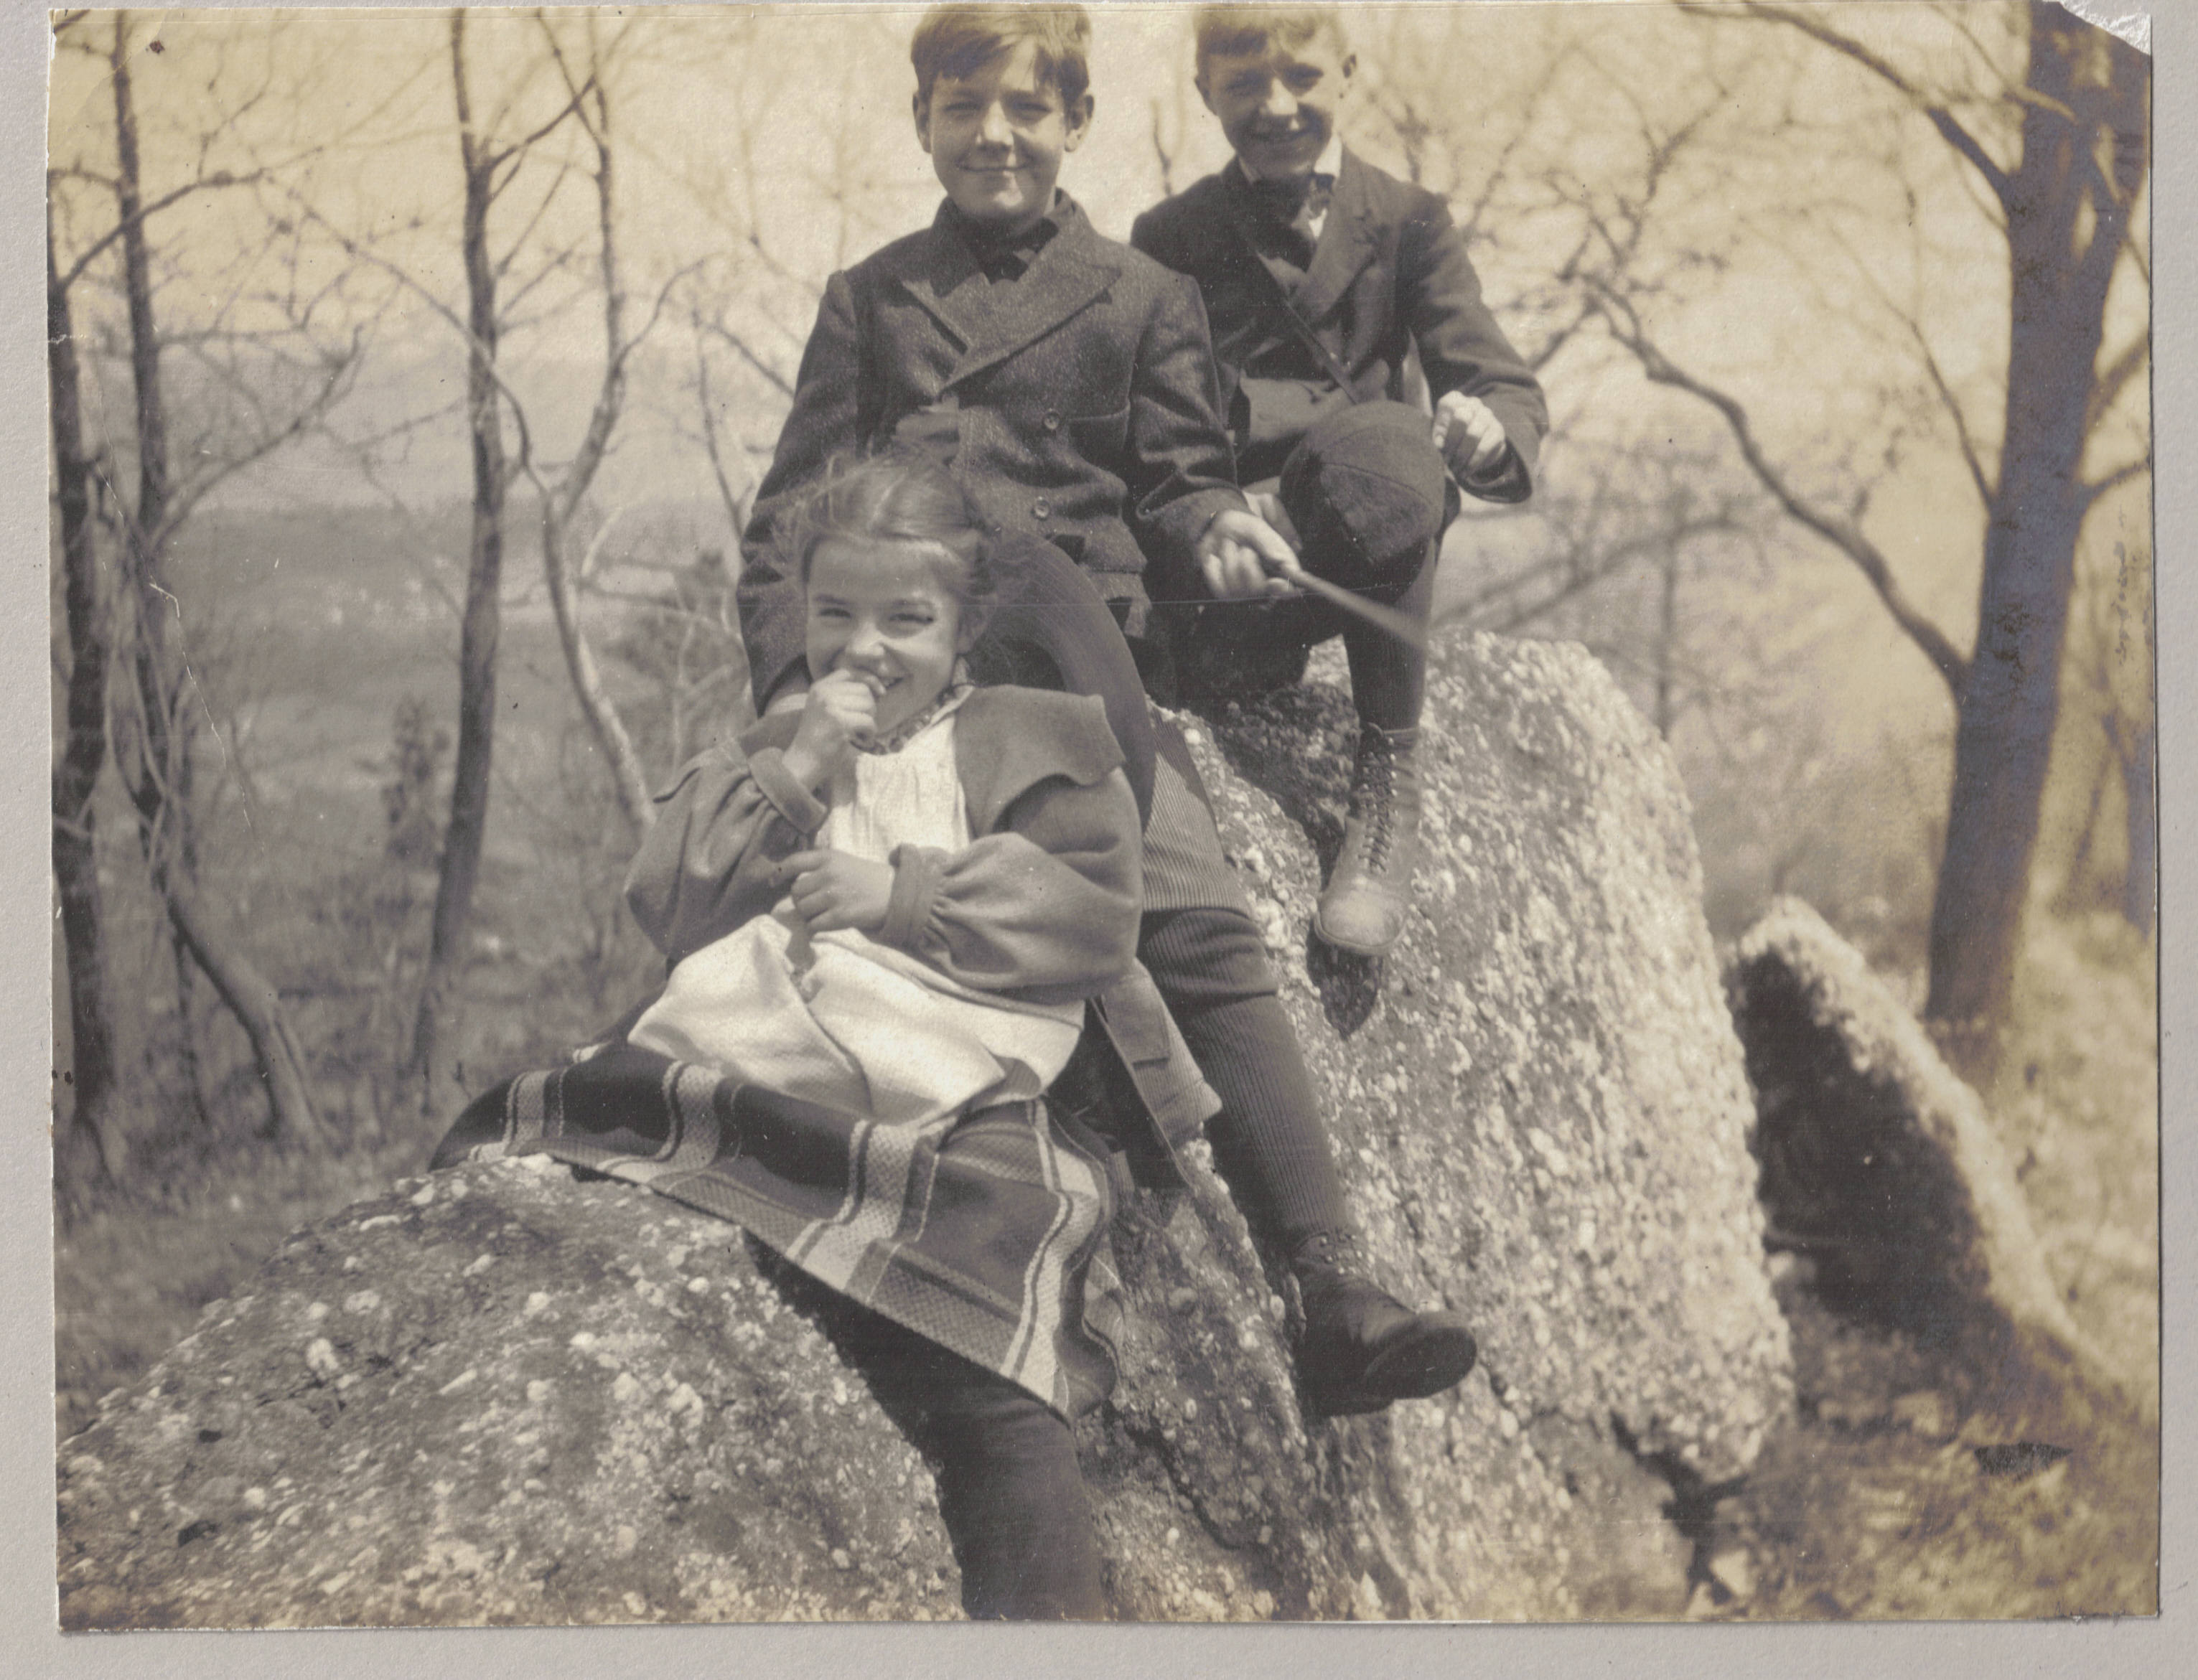 c 1910 photo album taken in the Shenandoah, Schuylkill Co., Pa area. 